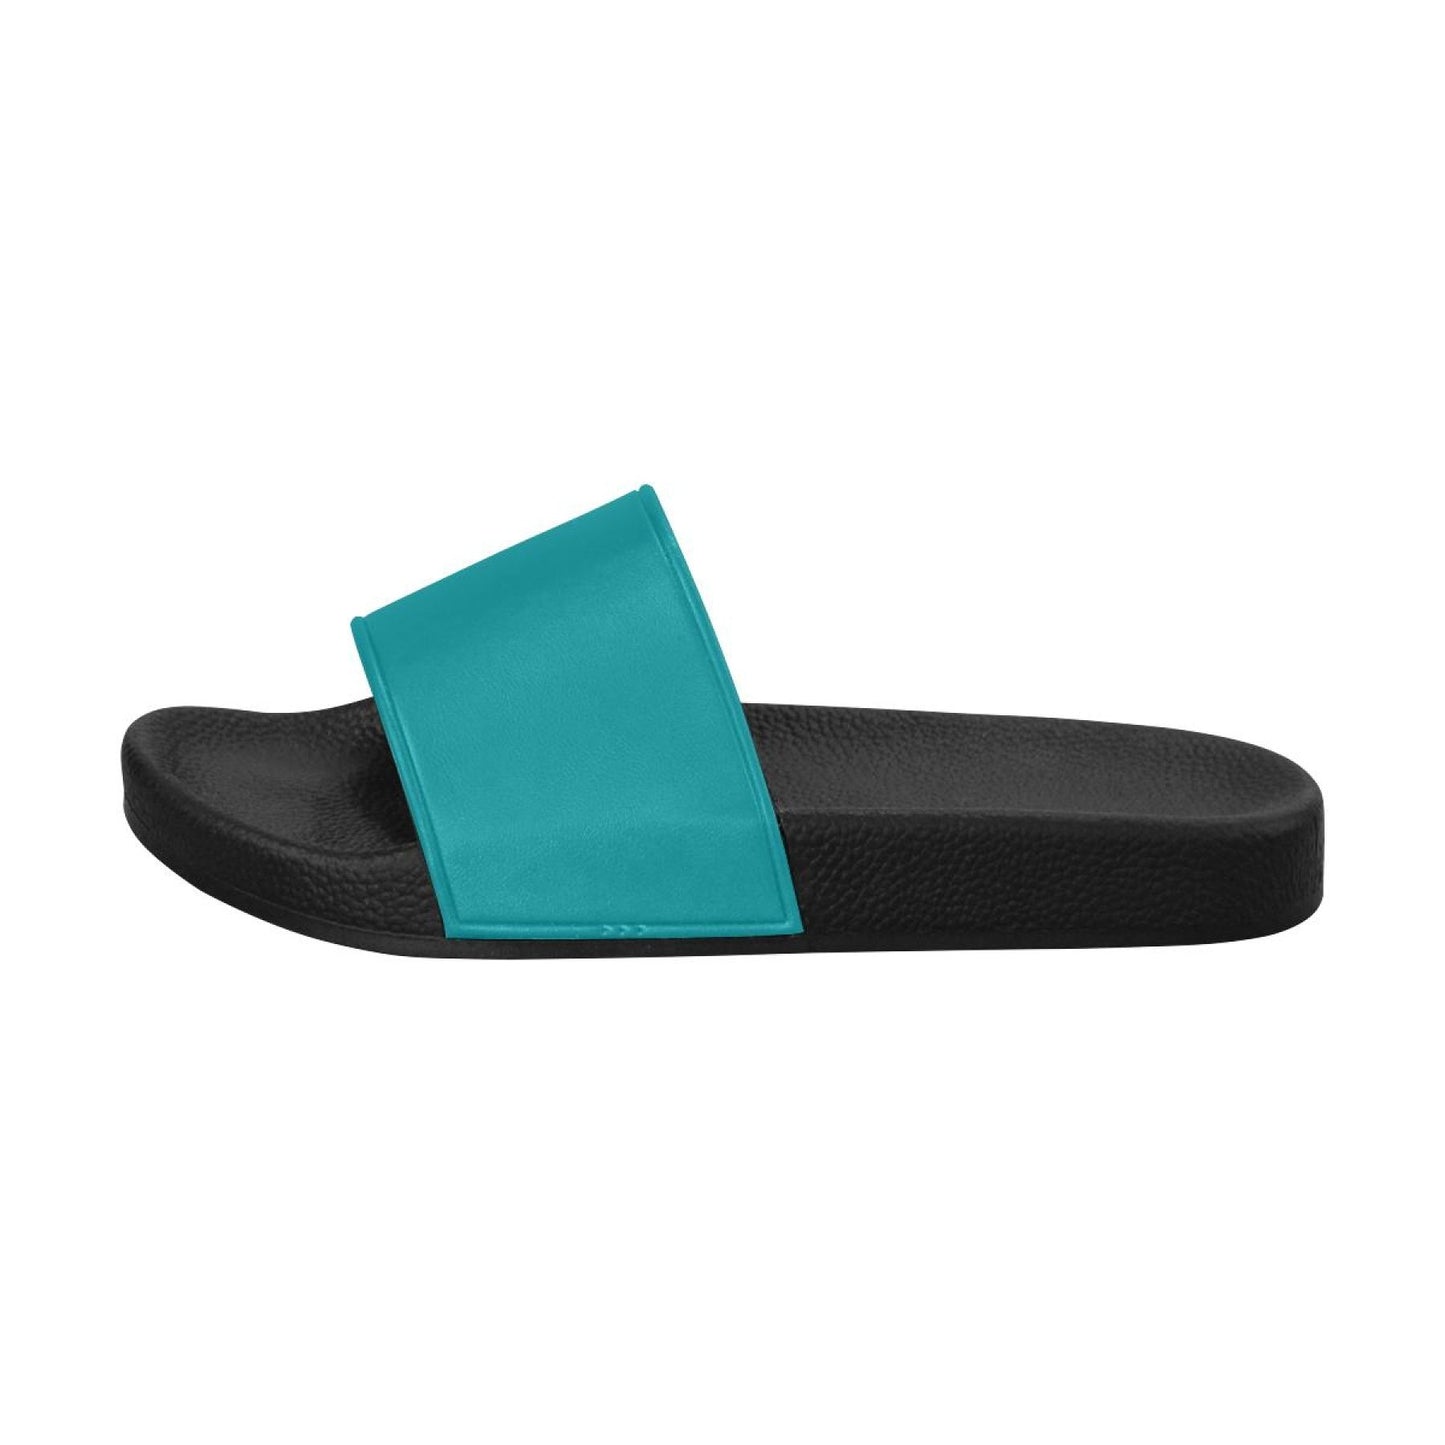 Womens Slides, Flip Flop Sandals, Teal Green - Sun of the Beach Boutique